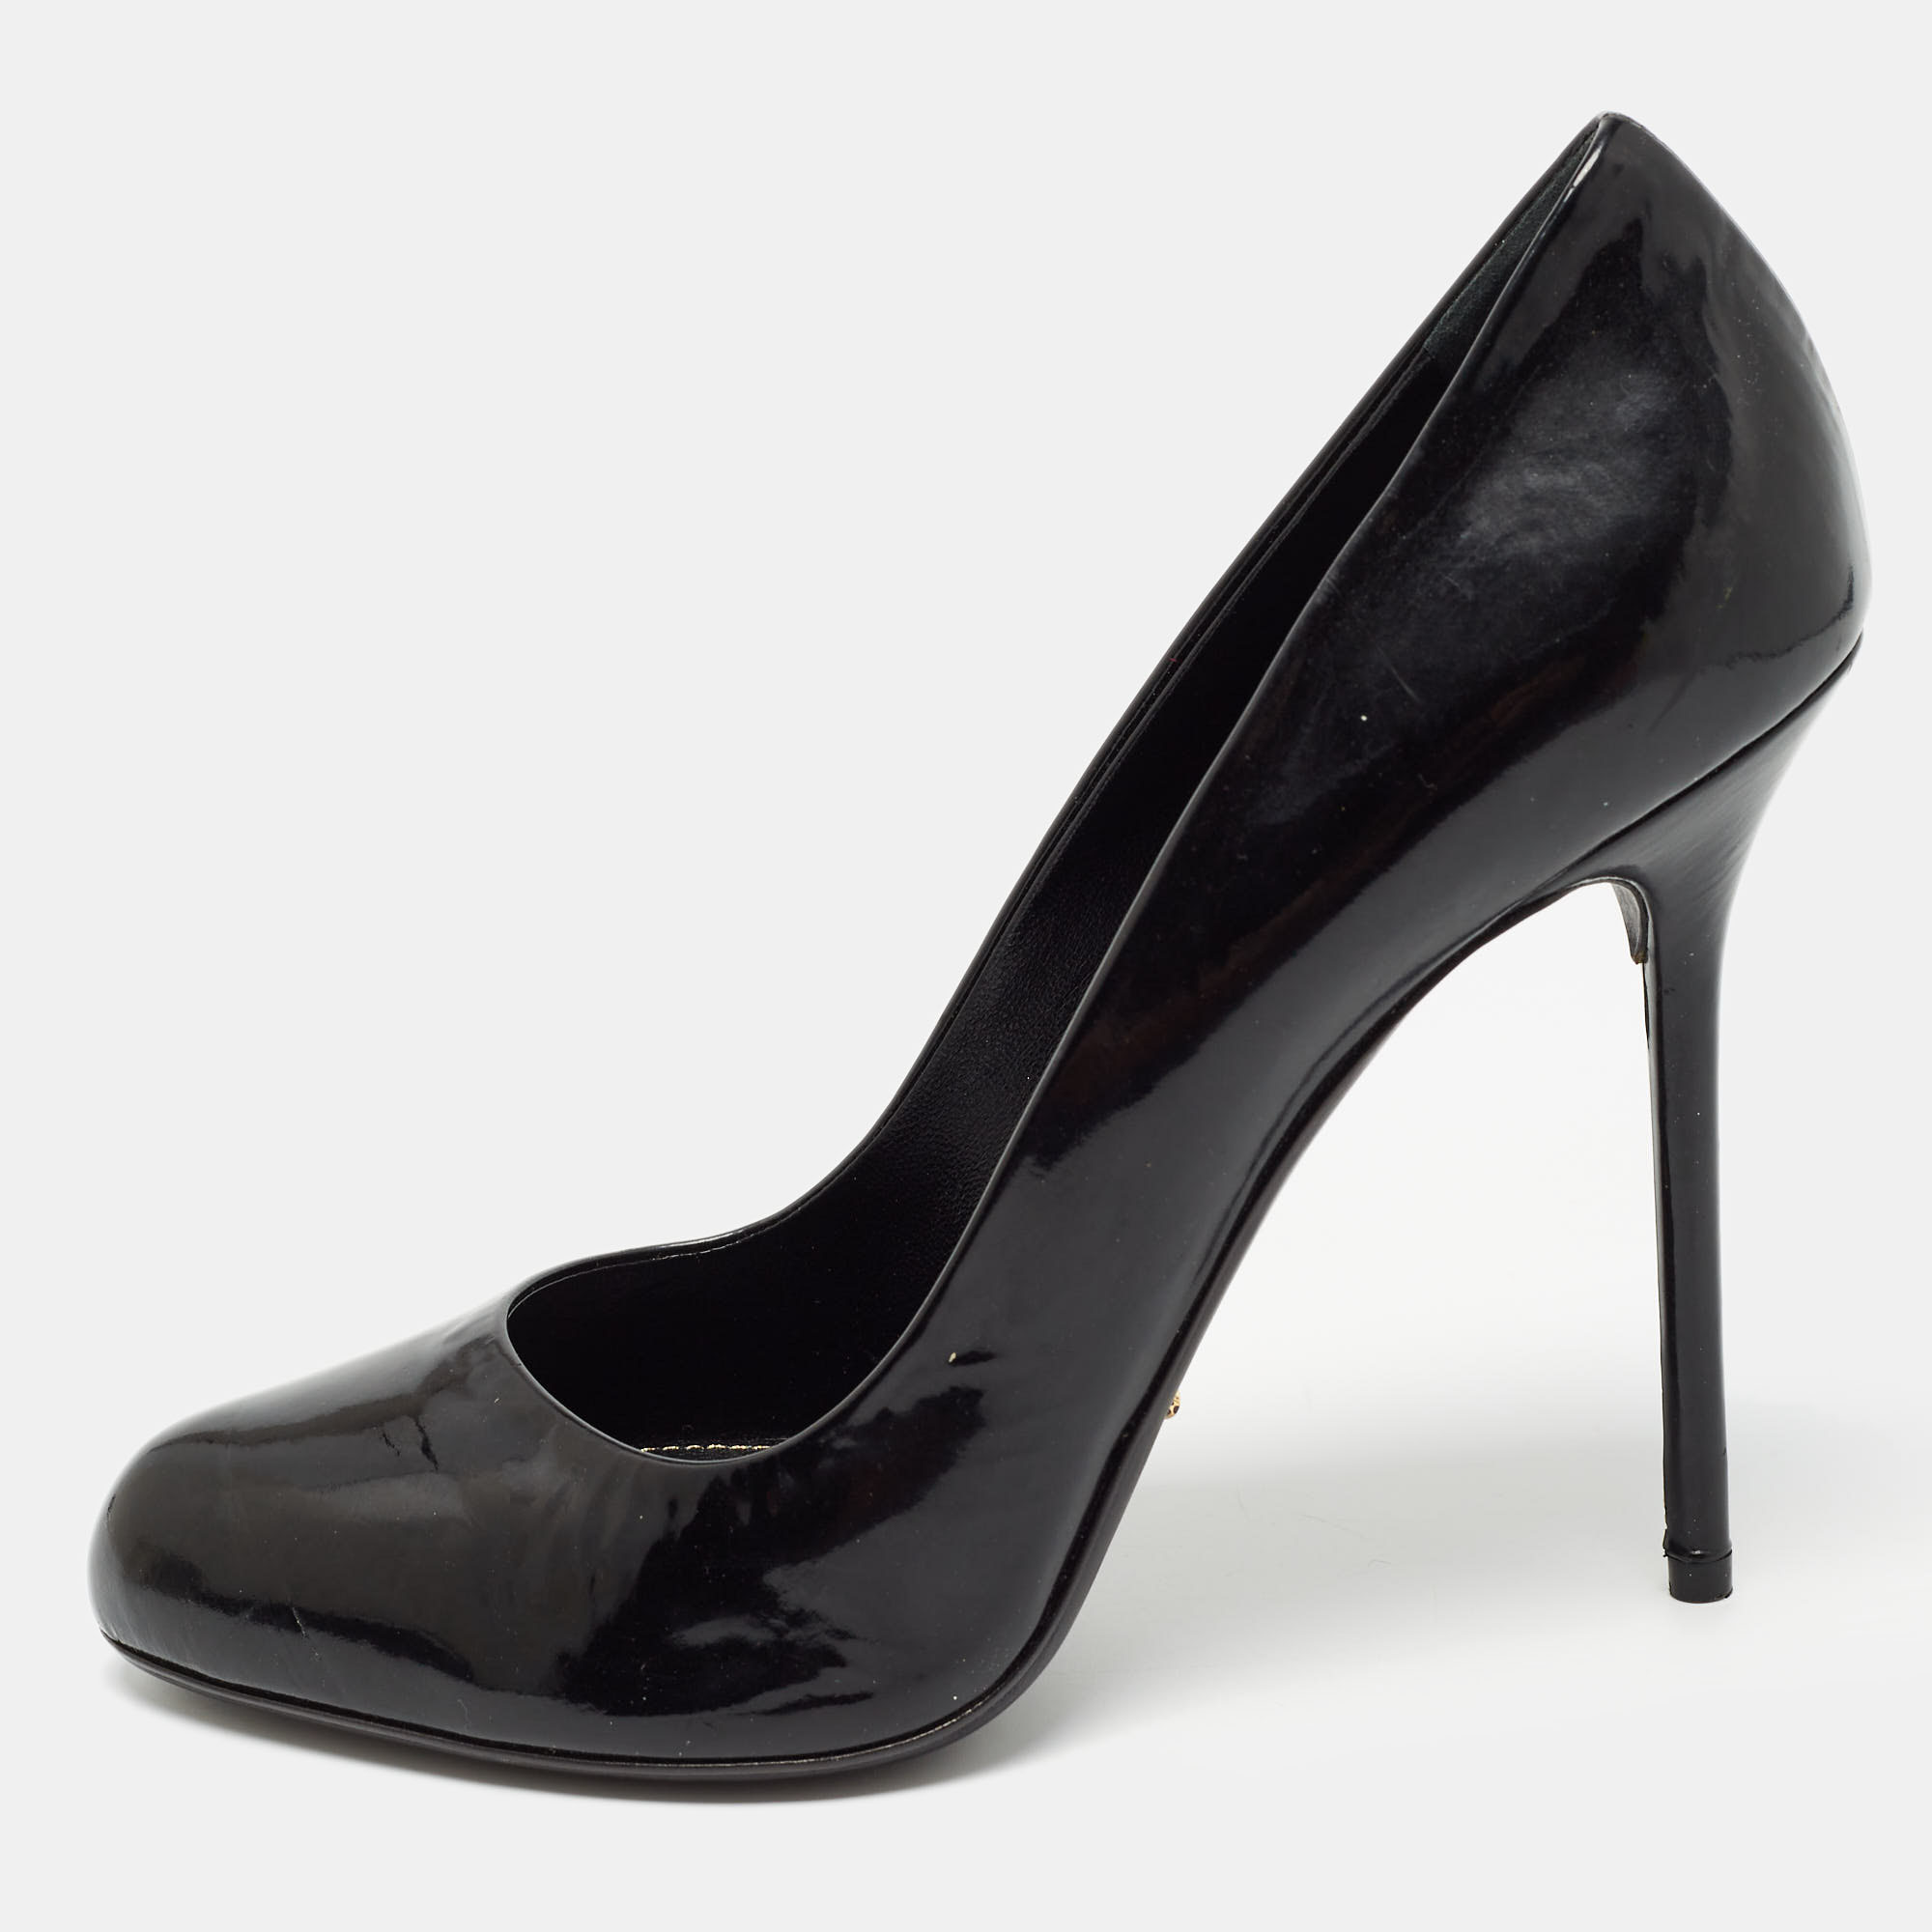 Sergio rossi black patent leather round toe pumps size 40